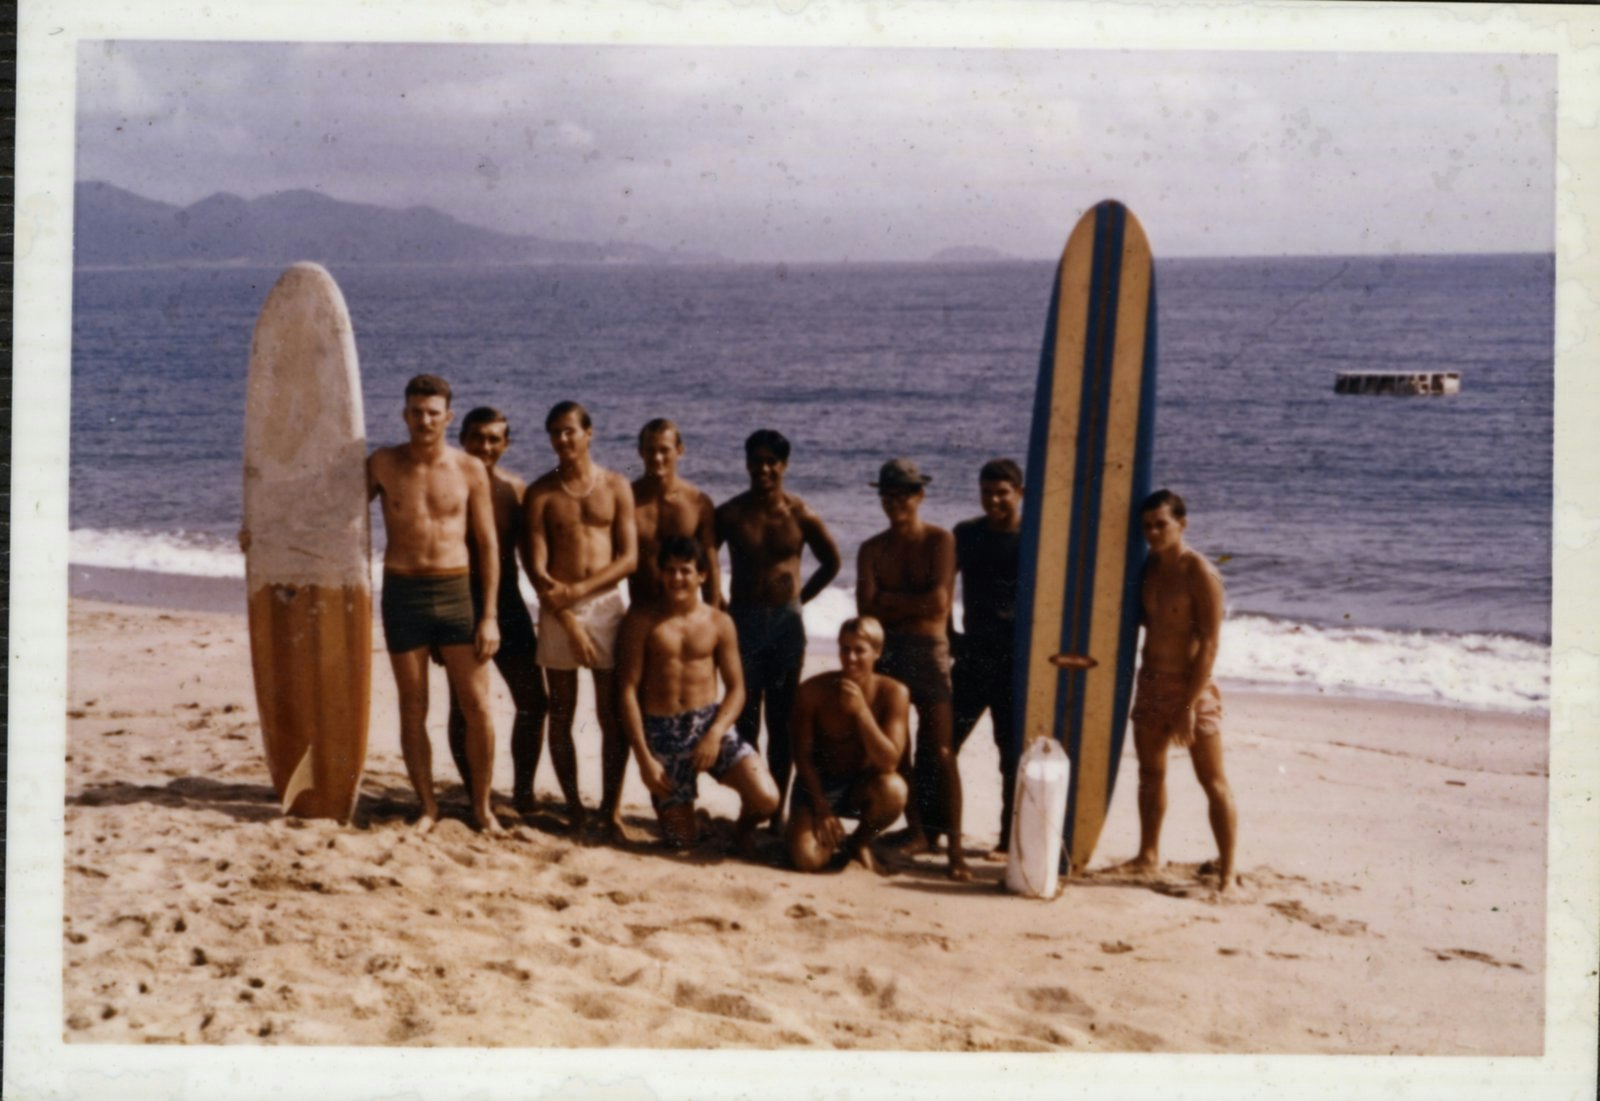 Bona fide lifeguards in 1960s California.